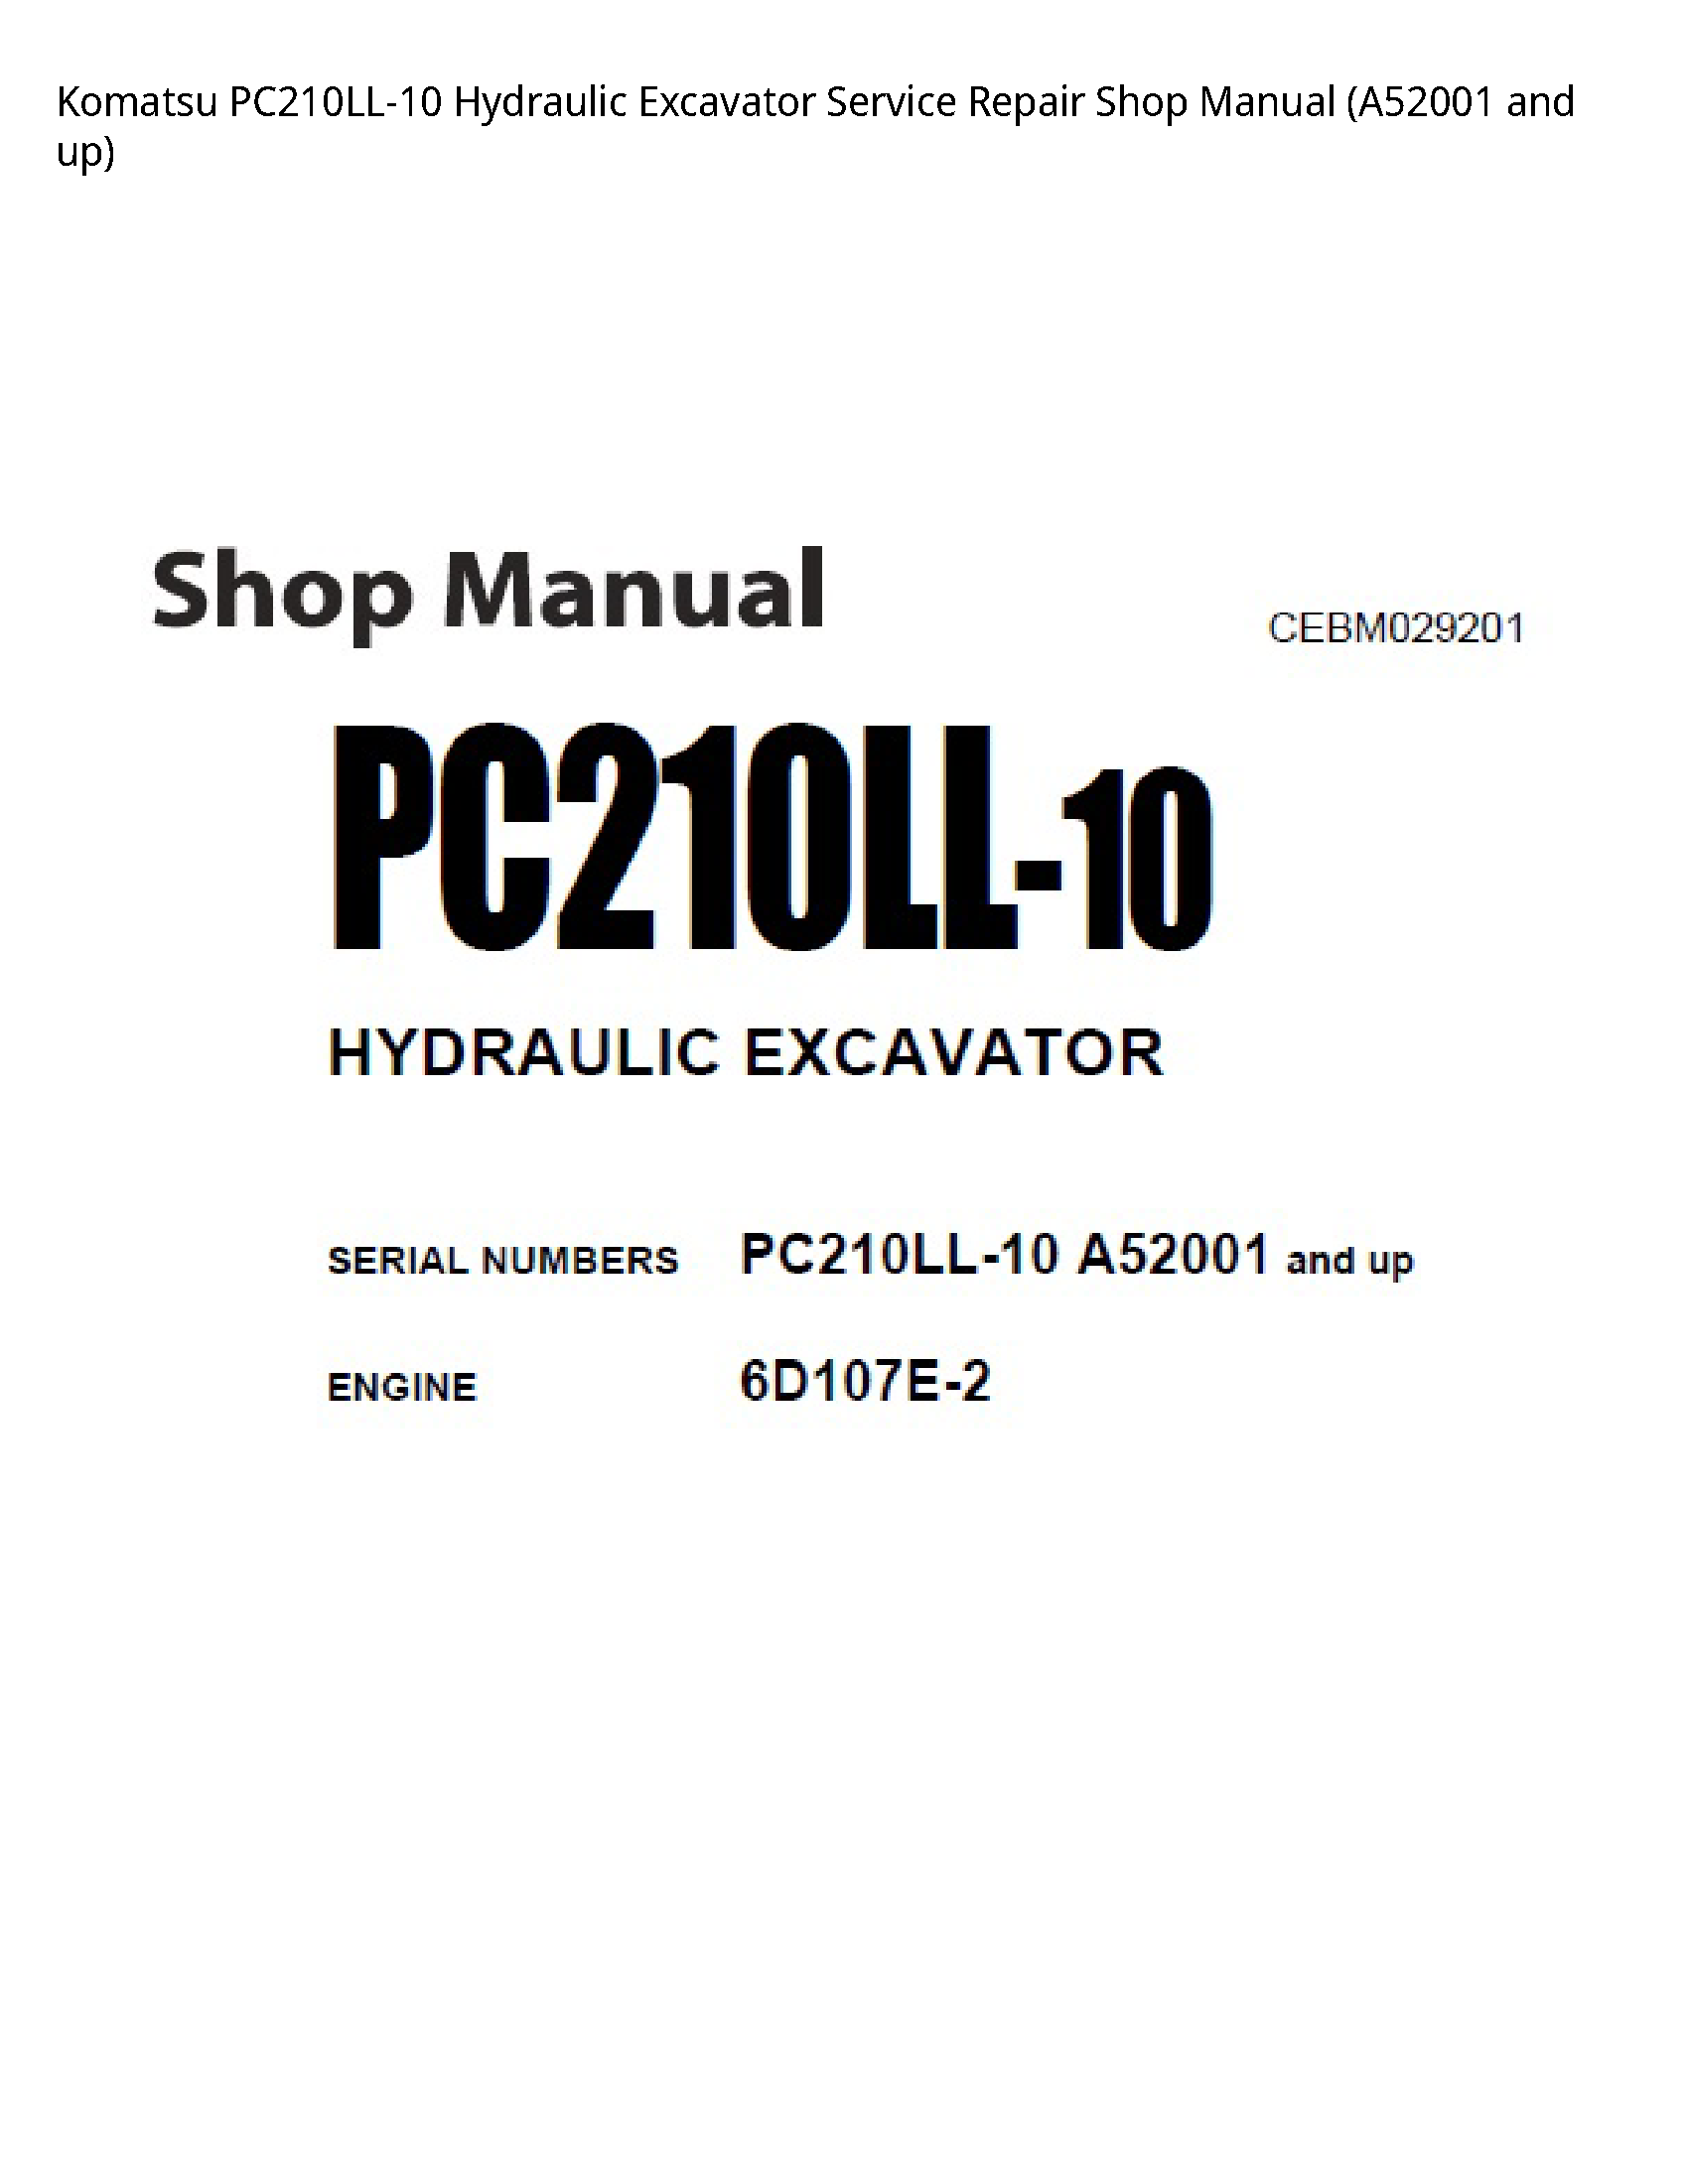 KOMATSU PC210LL-10 Hydraulic Excavator manual